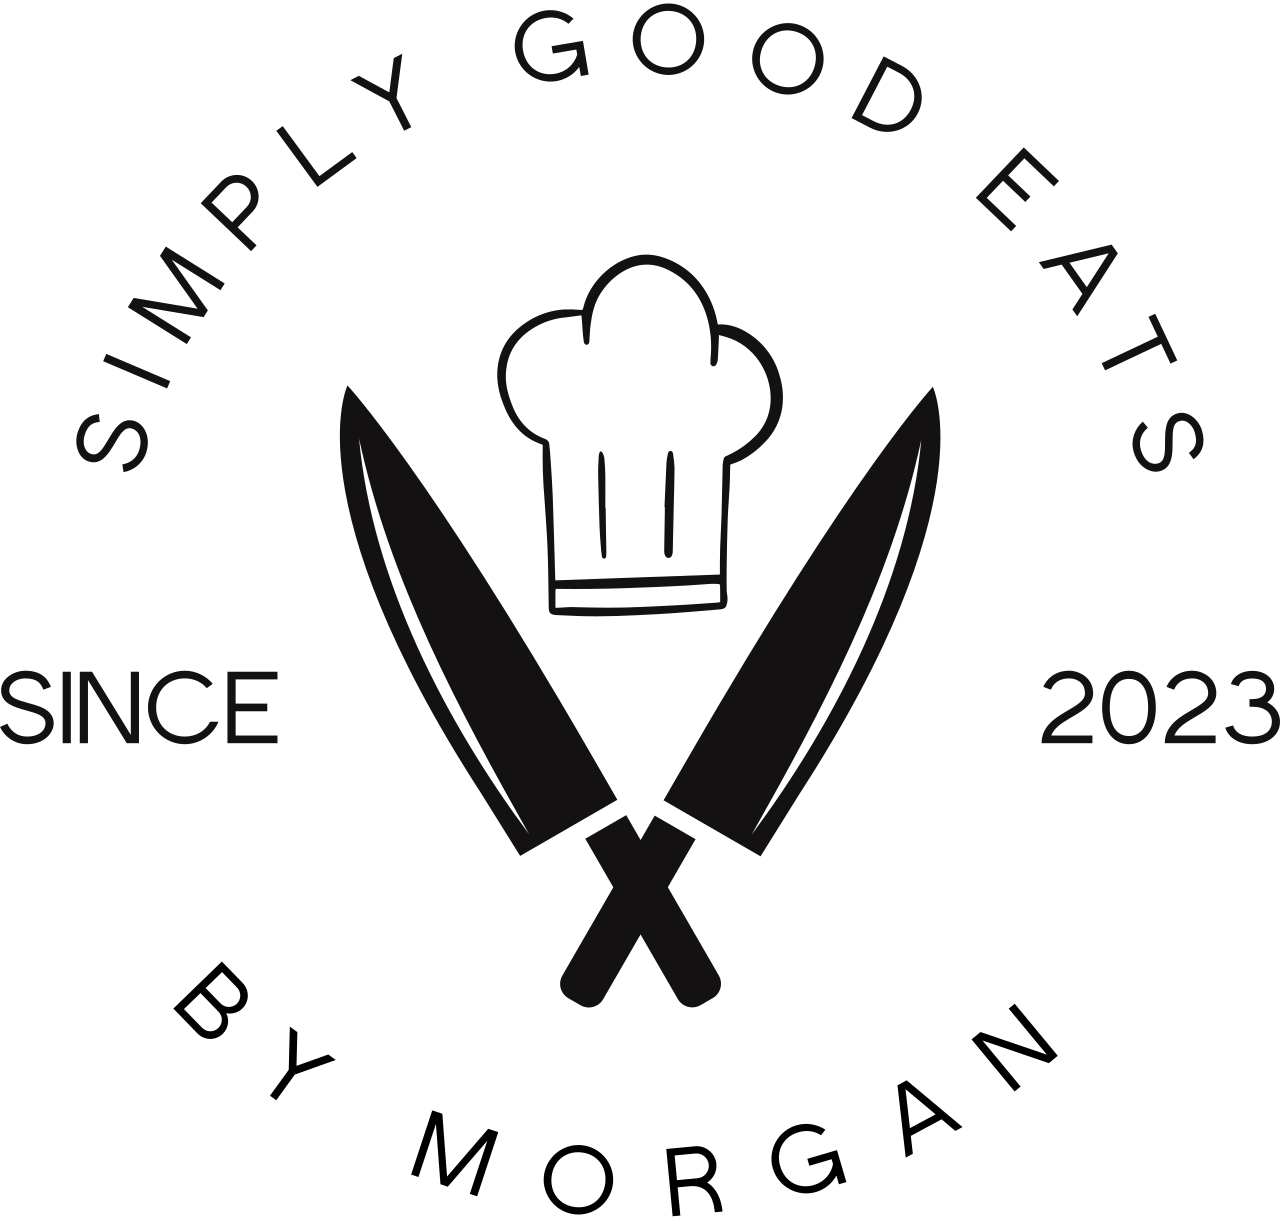 SIMPLY GOOD EATS's logo